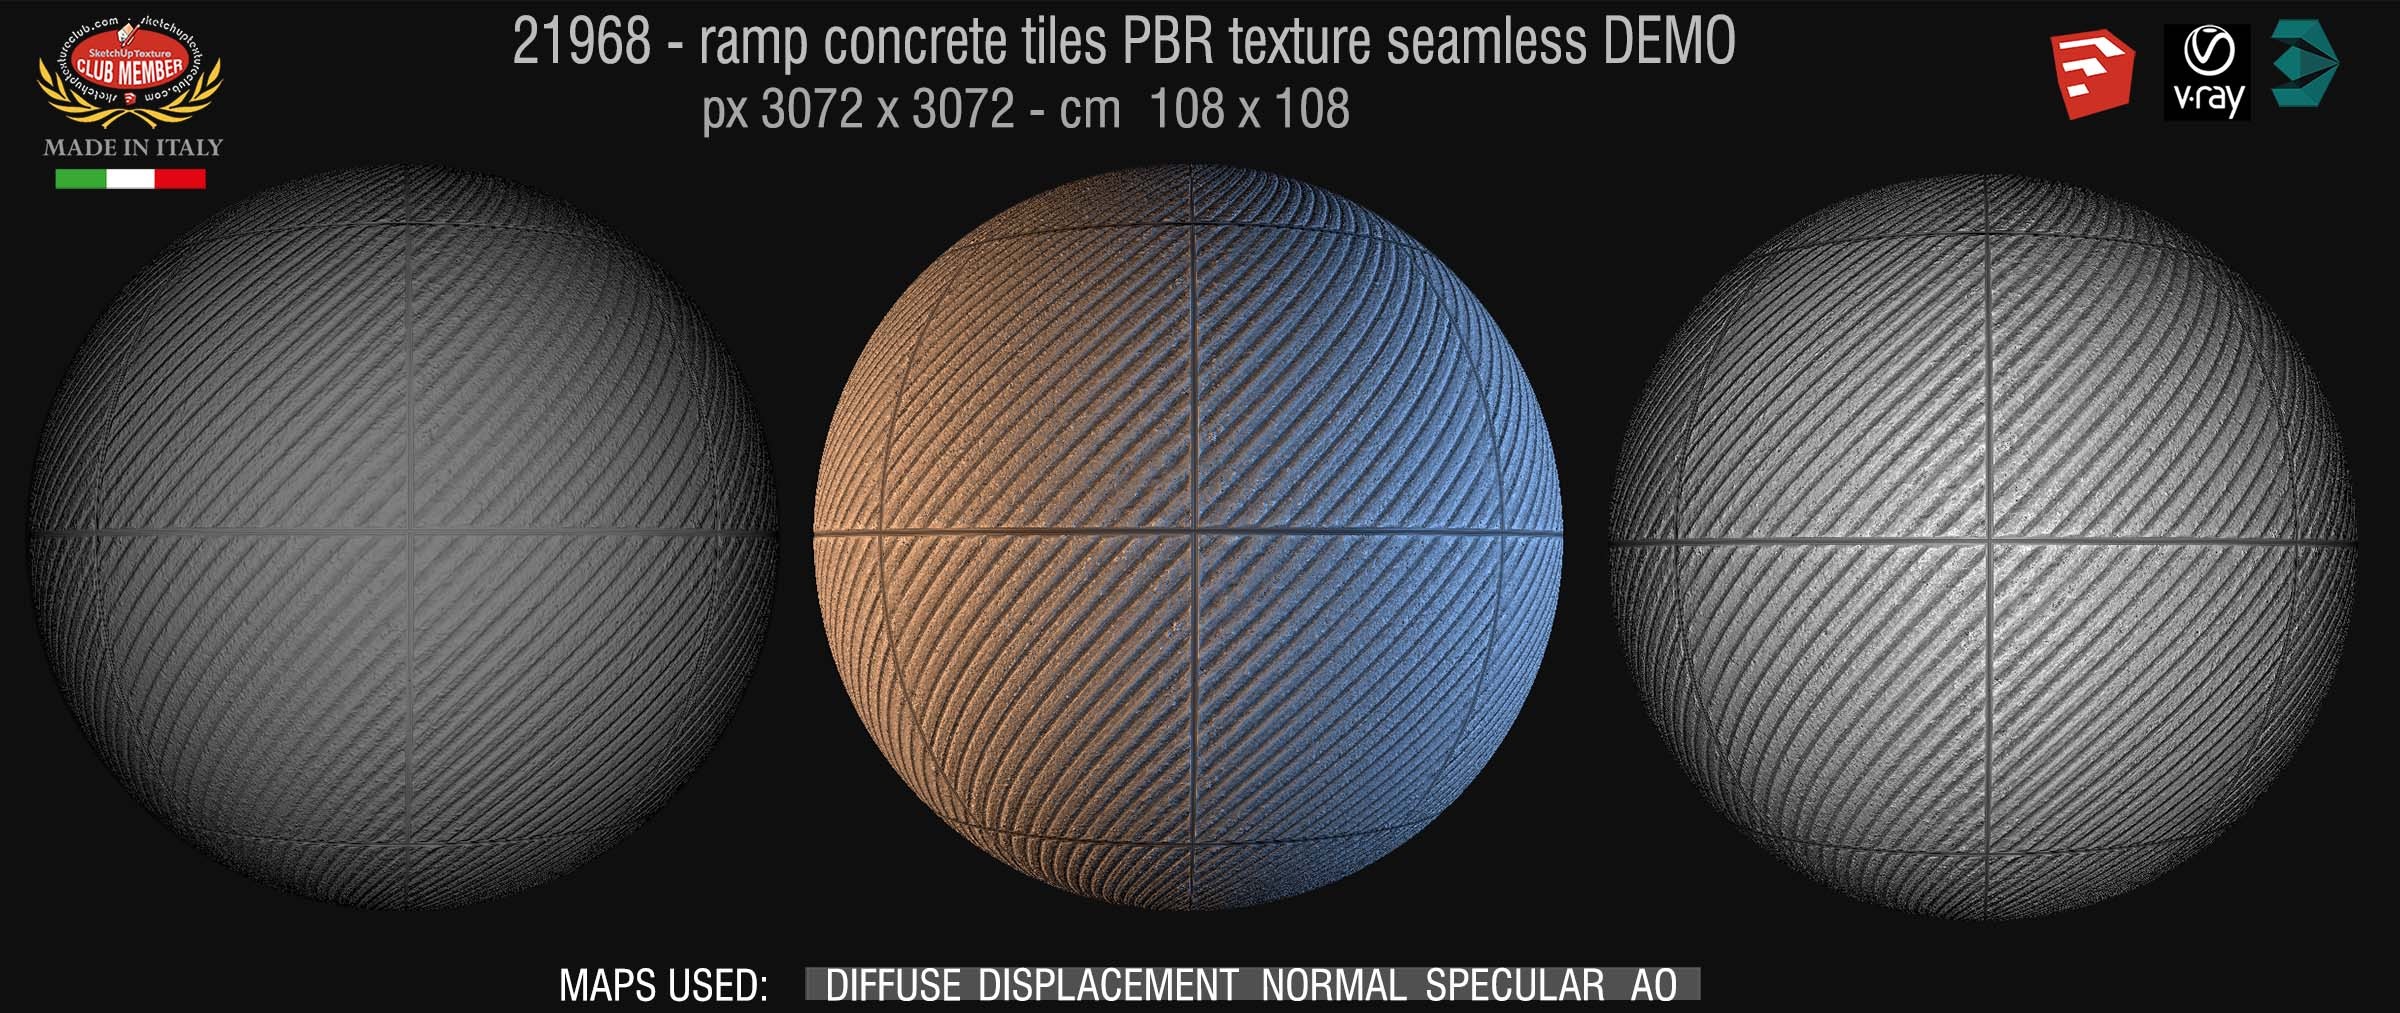 21968 Ramp concrete tiles PBR texture seamless DEMO